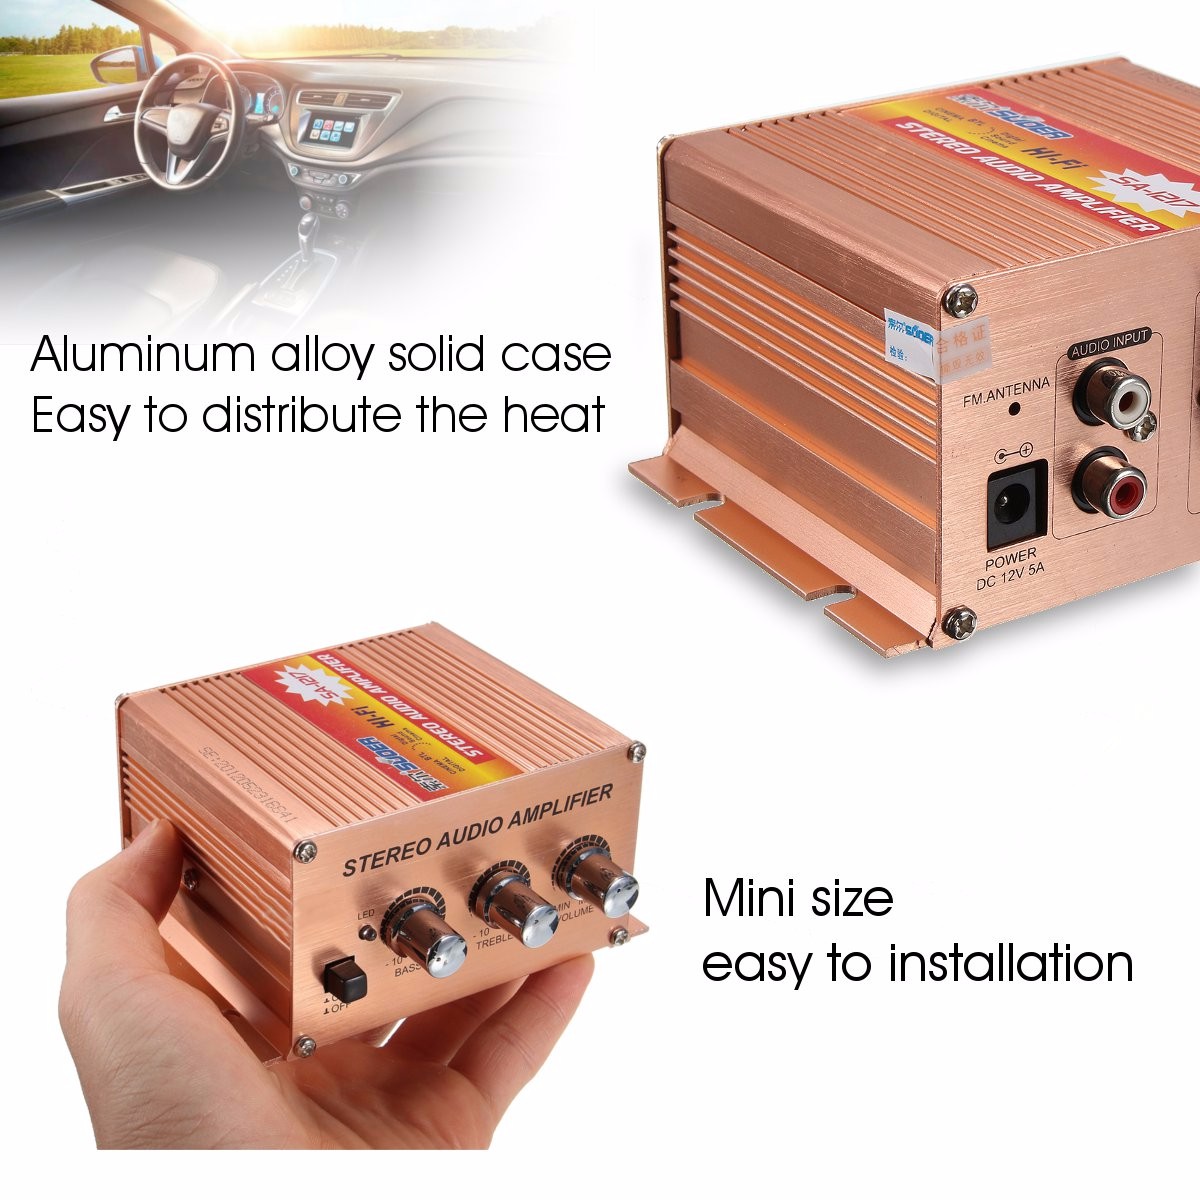 Suoertrade-SA-1217-Mini-Hi-Fi-500W-21CH-Channel-Stereo-Audio-Amplifier-for-Car-Auto-Motorcycle-1114674